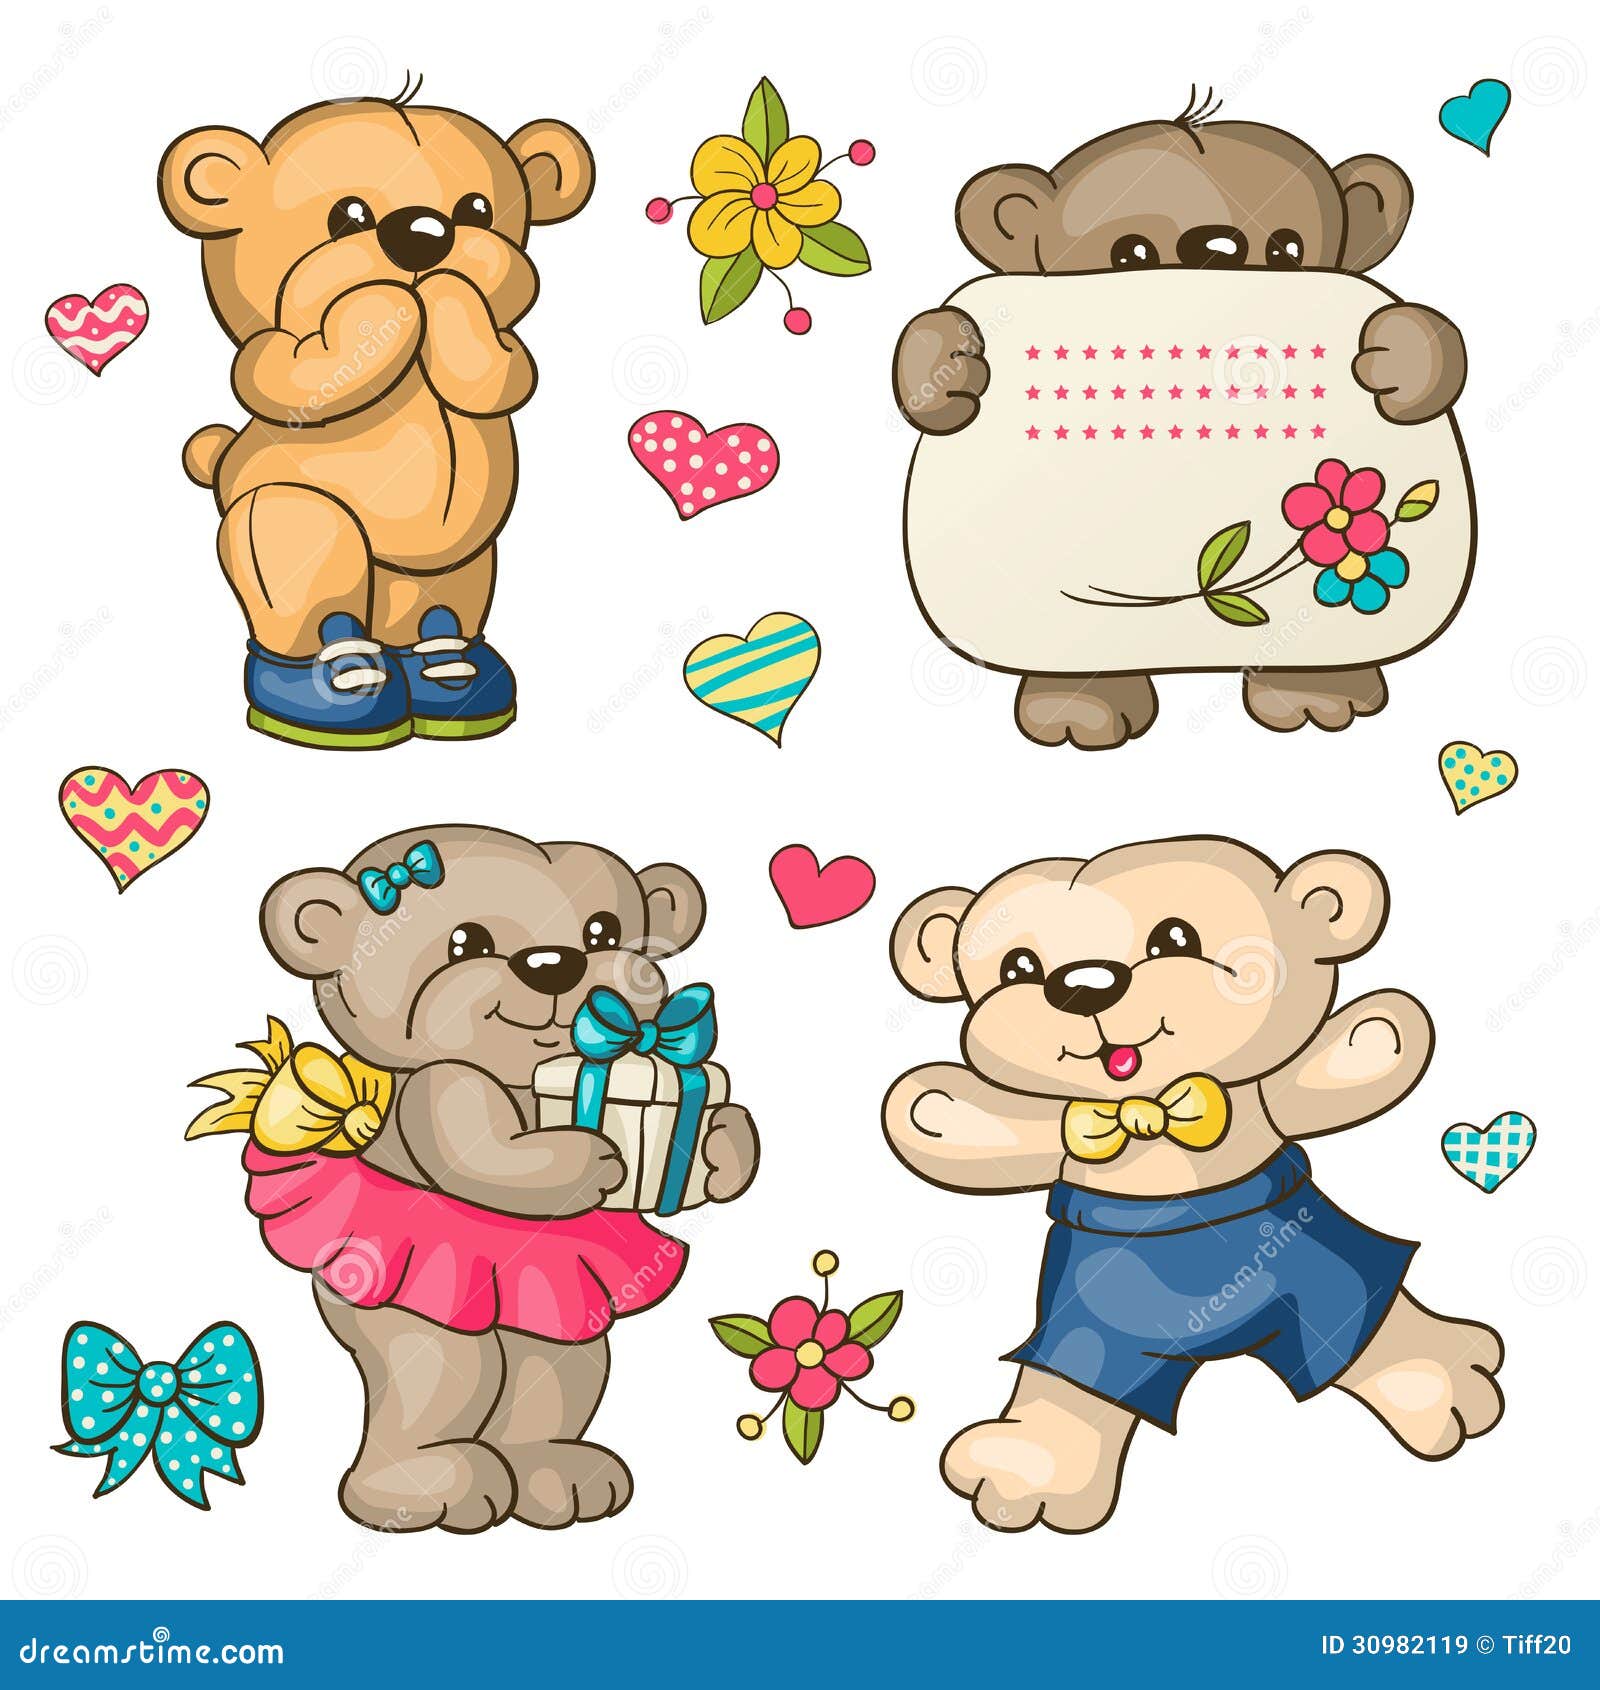 Teddy bears stock vector. Illustration of cheerful, animals - 30982119